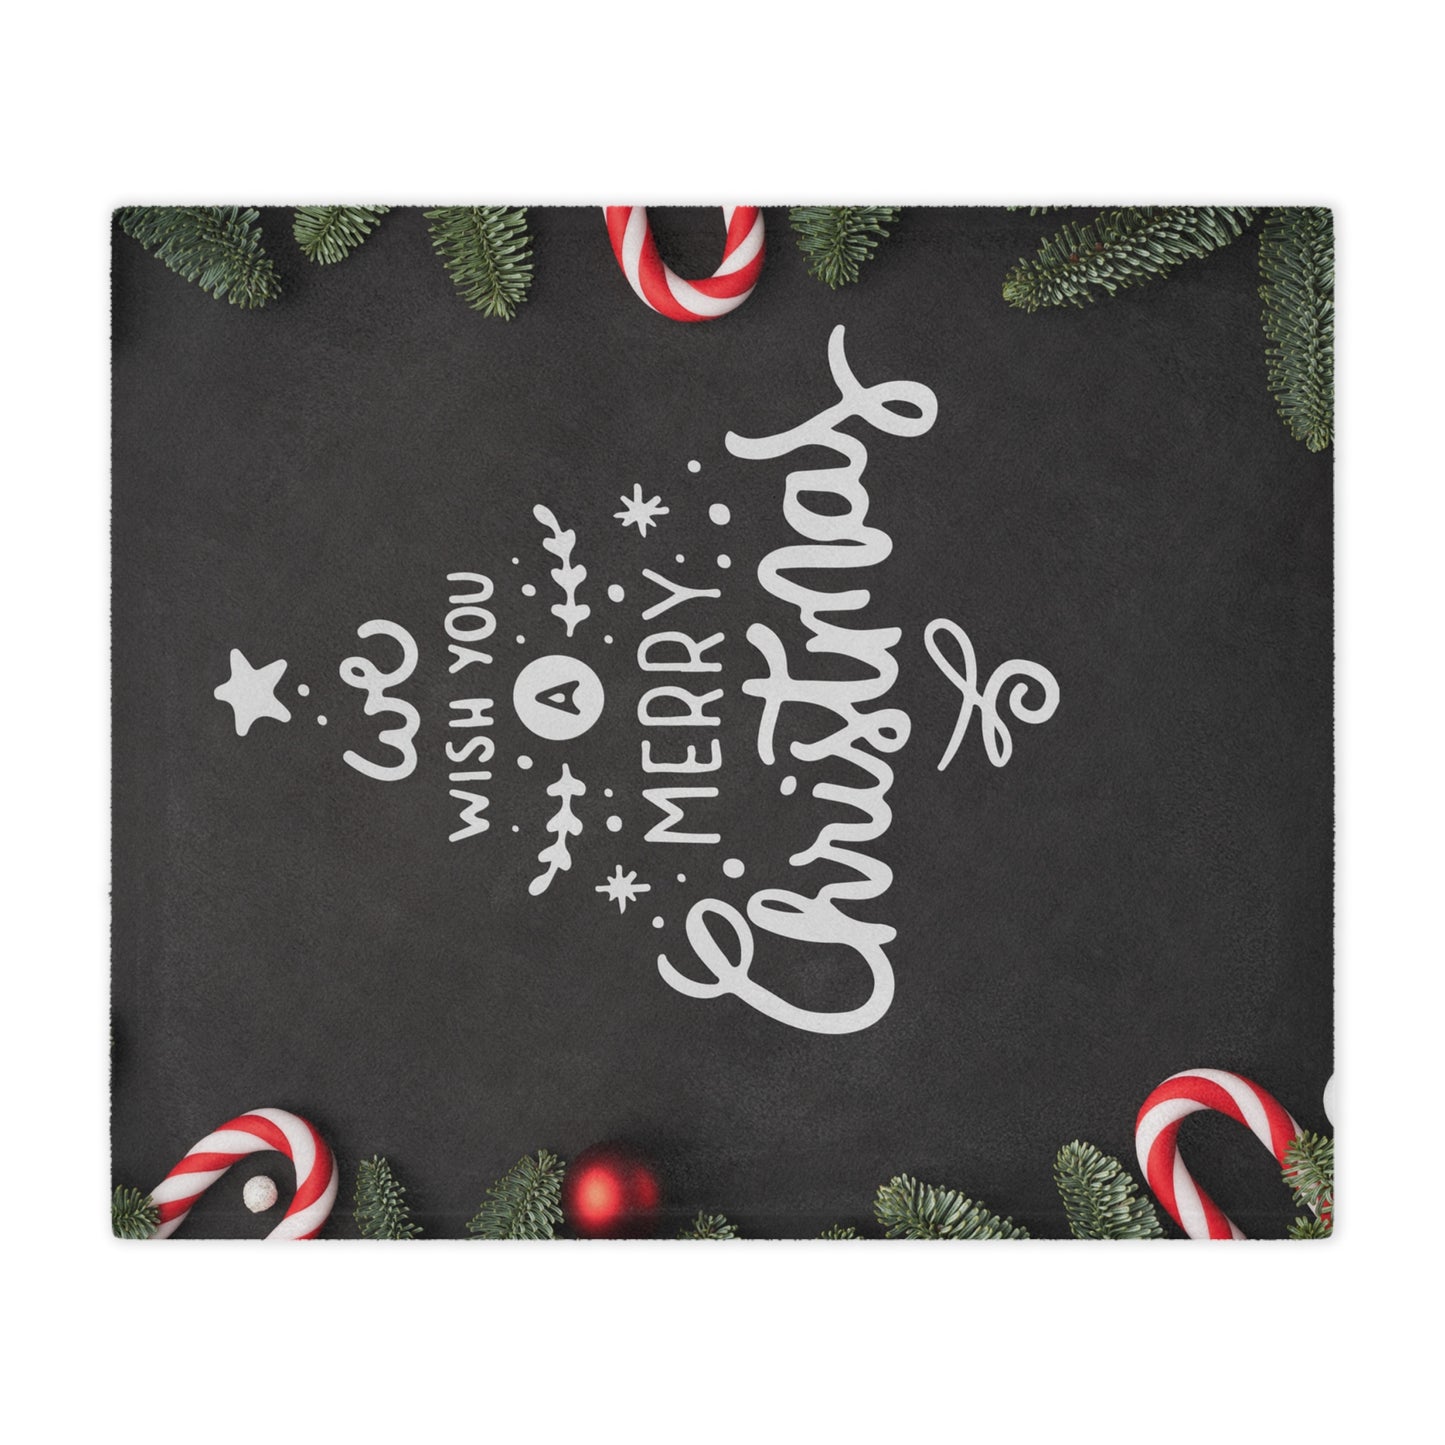 We Wish You Merry Christmas Printed Minky Blanket, Black